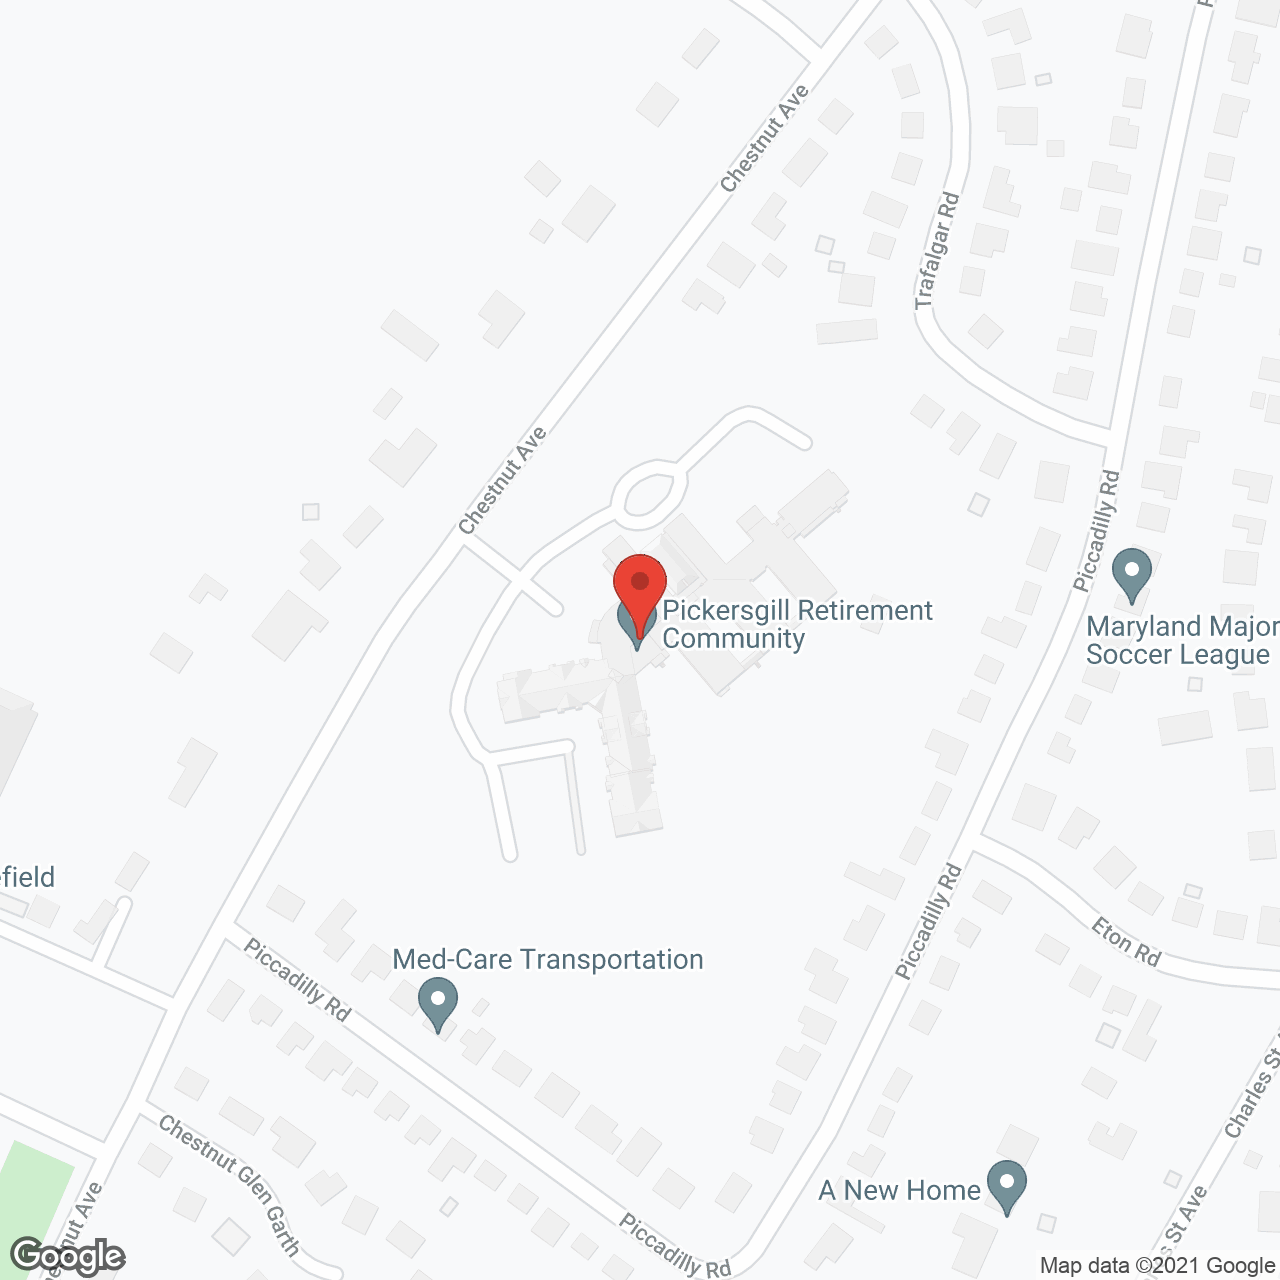 Pickersgill Retirement Community in google map